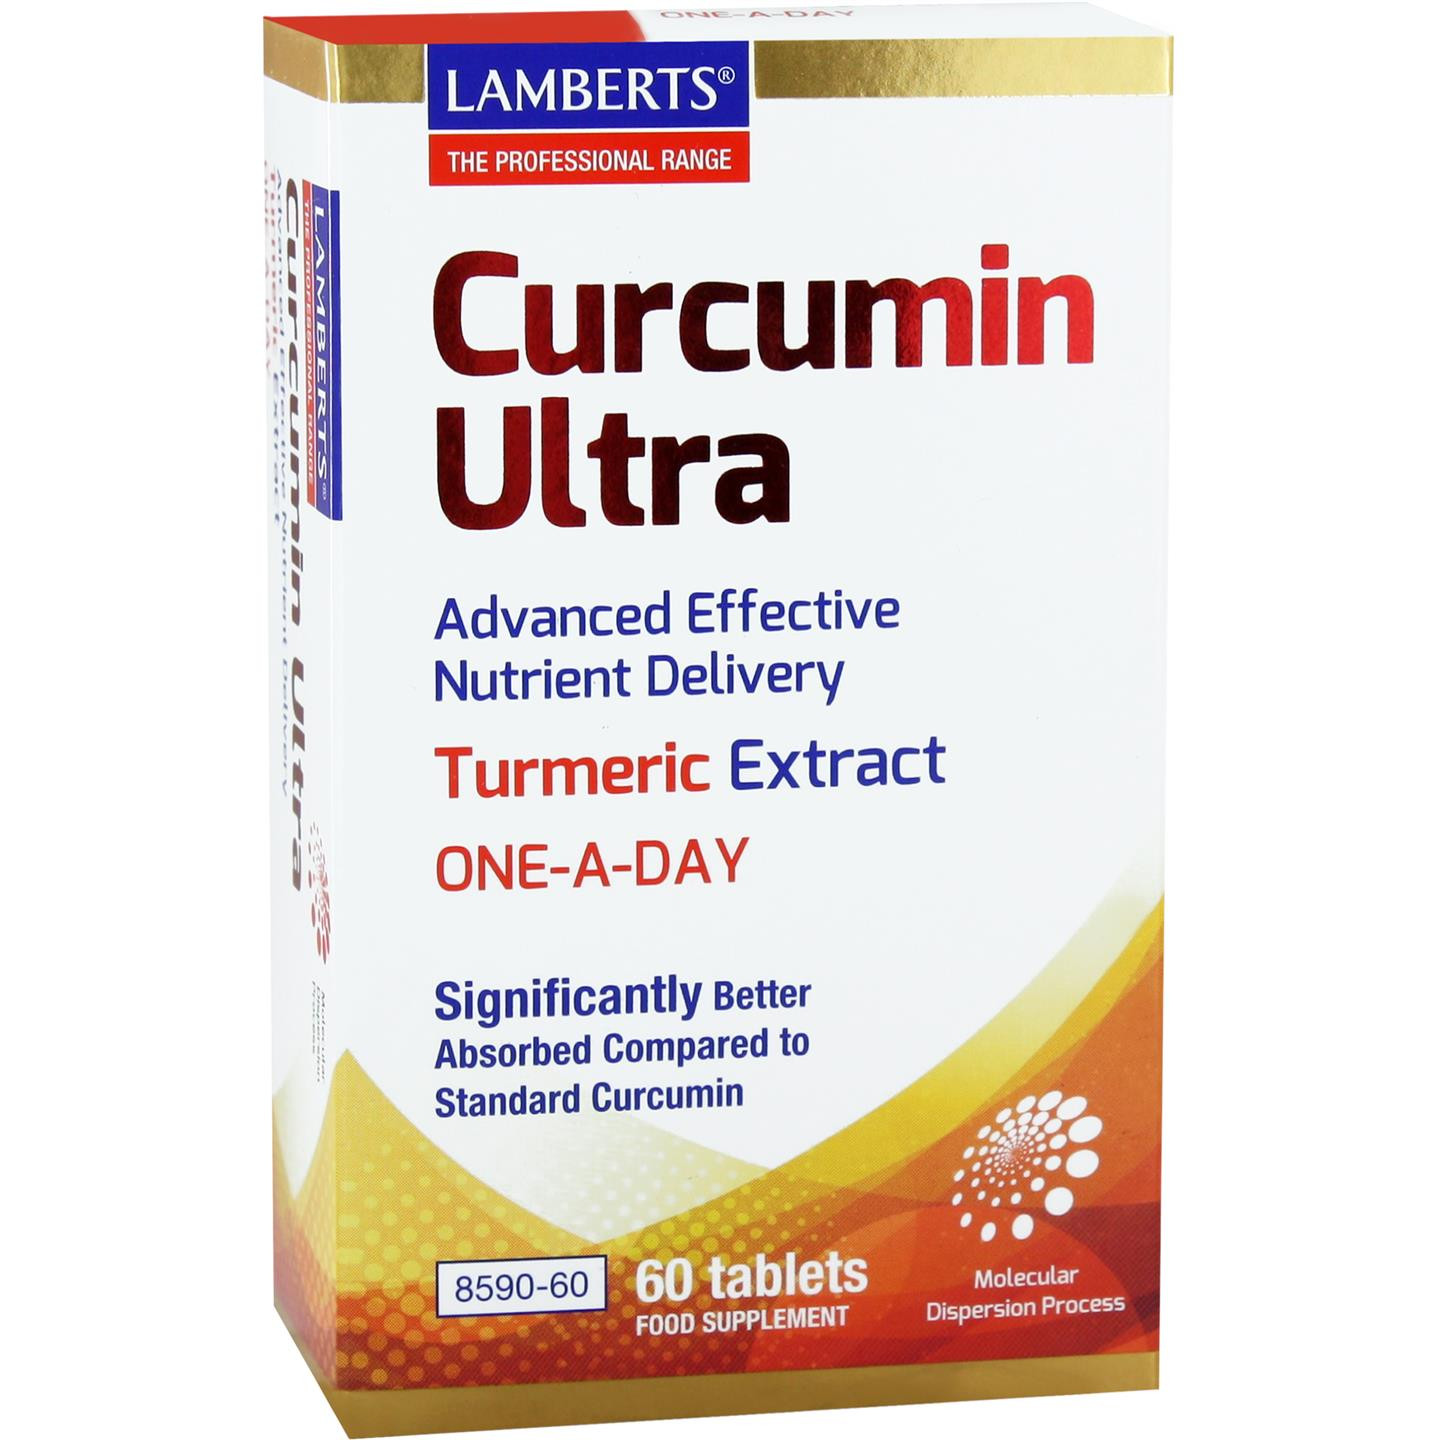 Curcumin Ultra